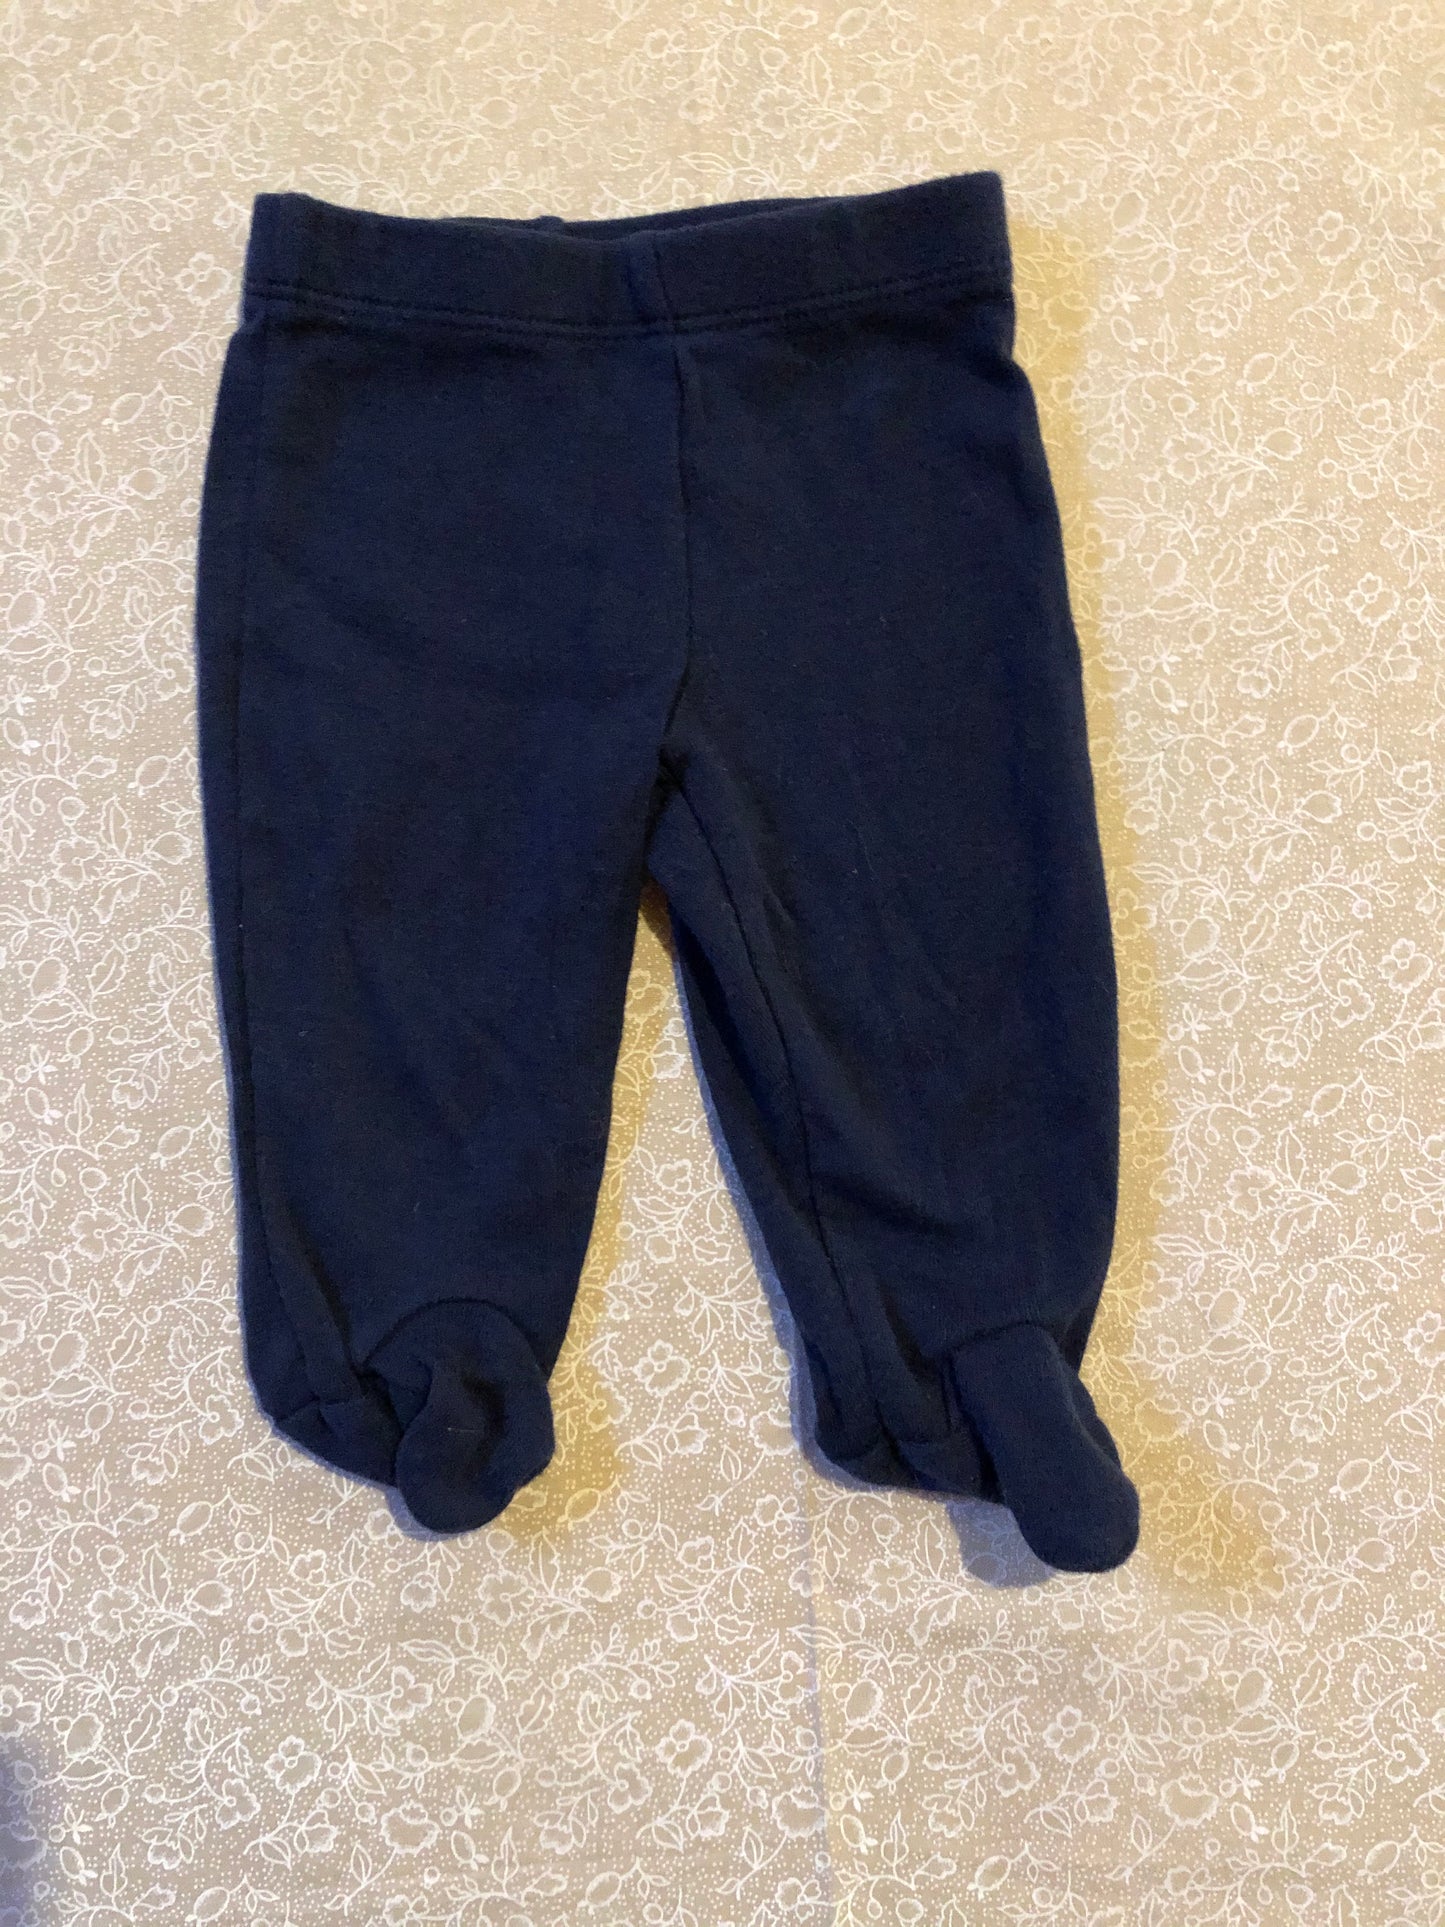 newborn-pants-carters-dark-blue-footed